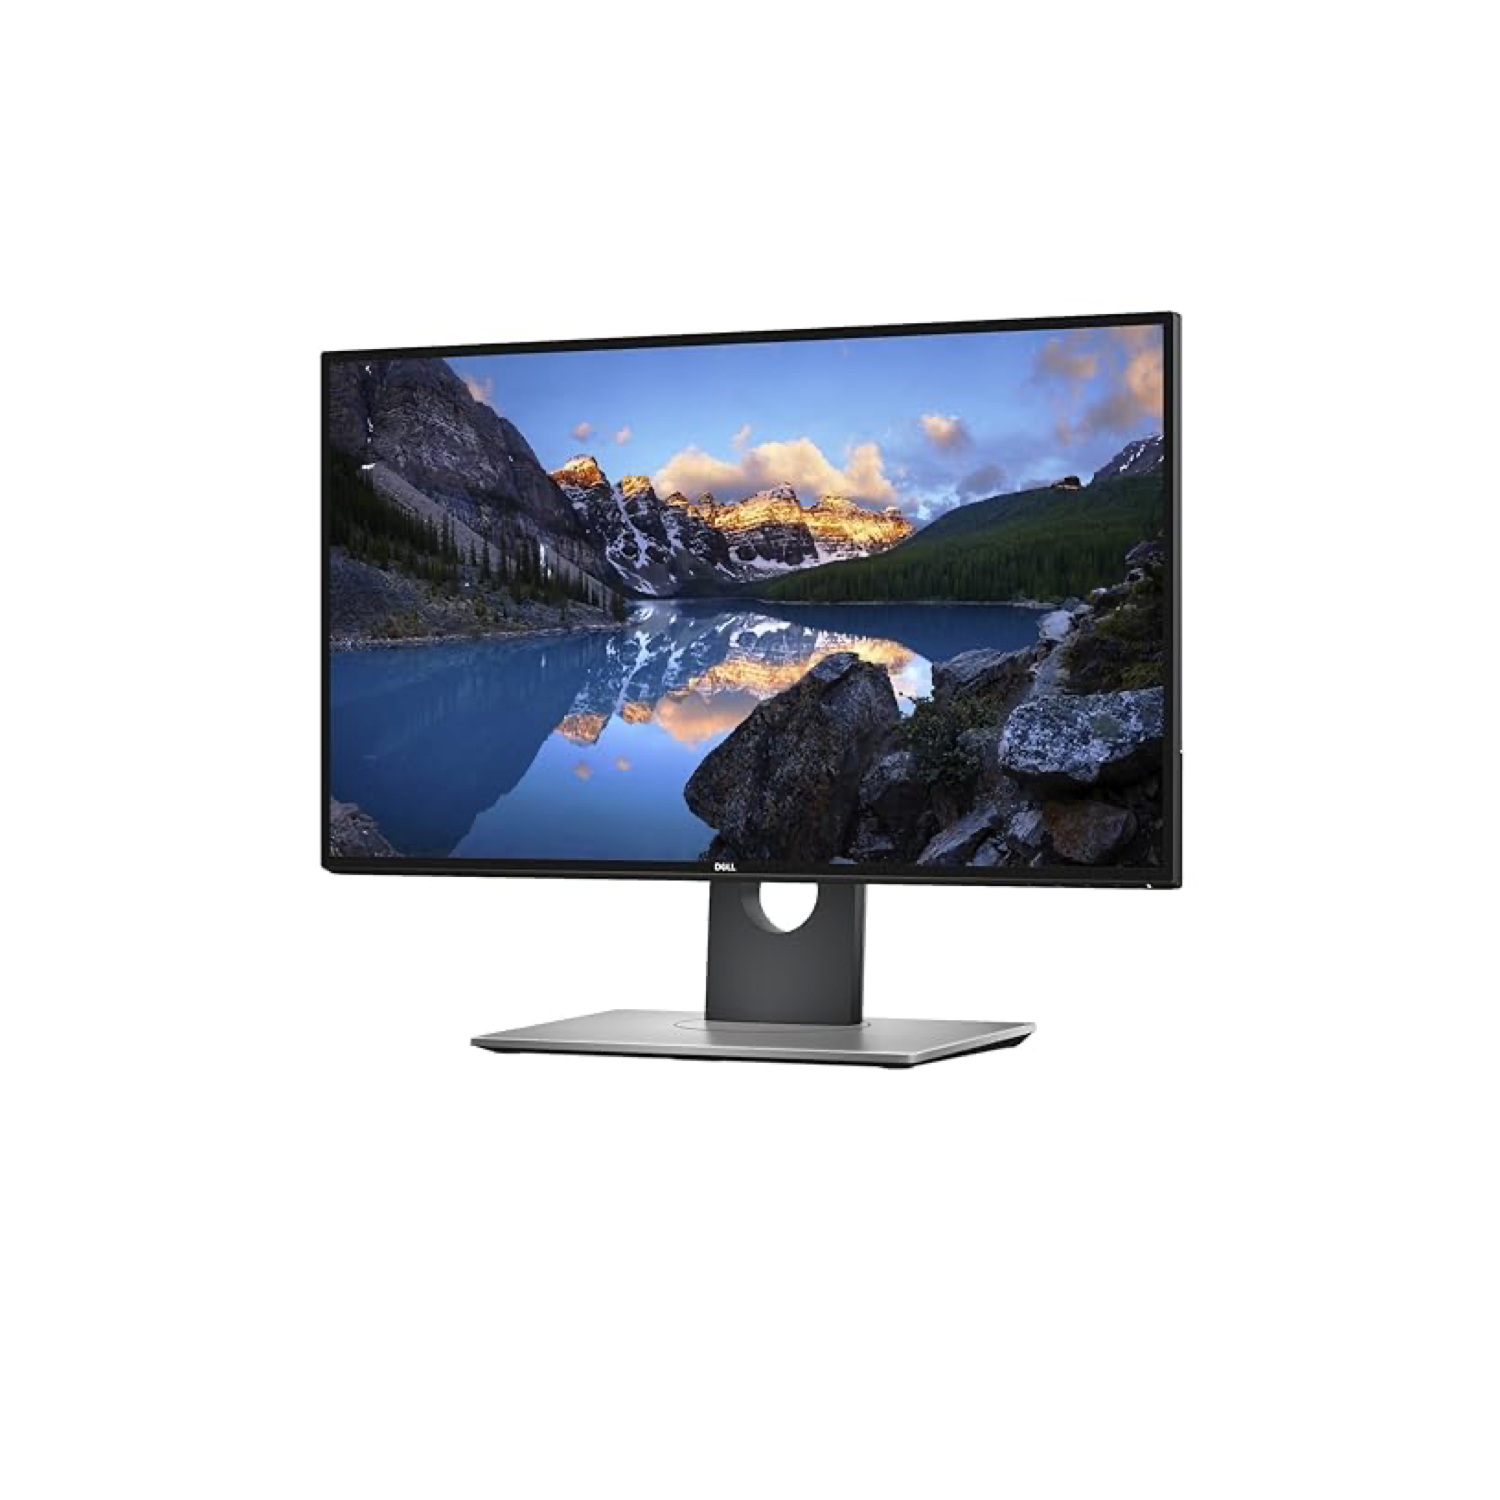 Dell 25″ diagonal, Resolution 2560 x 1440(QHD) Monitor